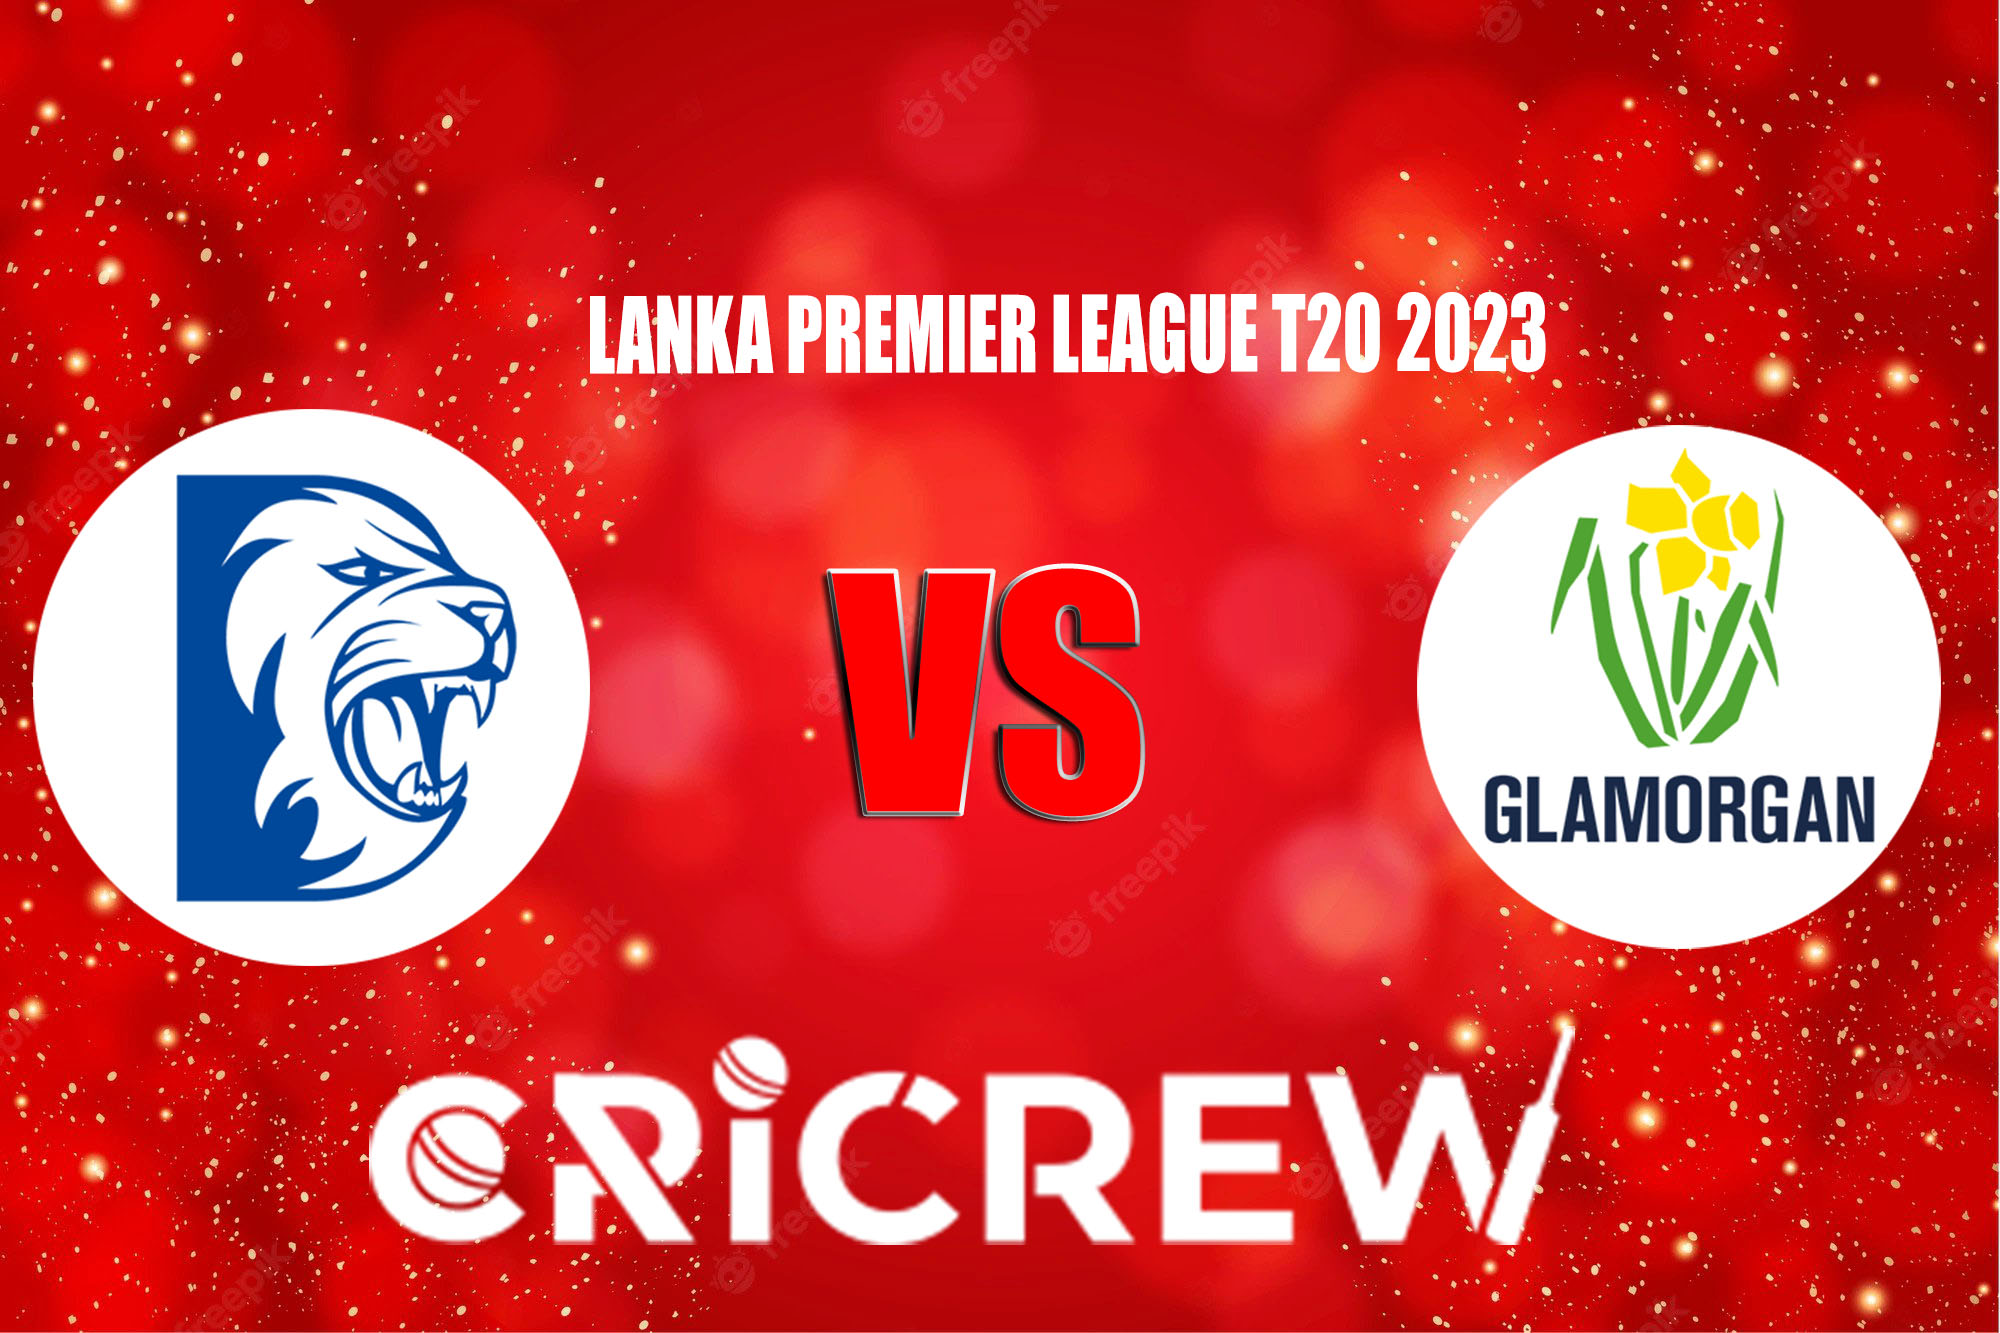 JK vs CS Live Score starts on23 Dec 2022, Fri, 7:30 PM IST, Mahinda Rajapaksa International Cricket Stadium. Here on www.cricrew.com you can find all Live, Upc.